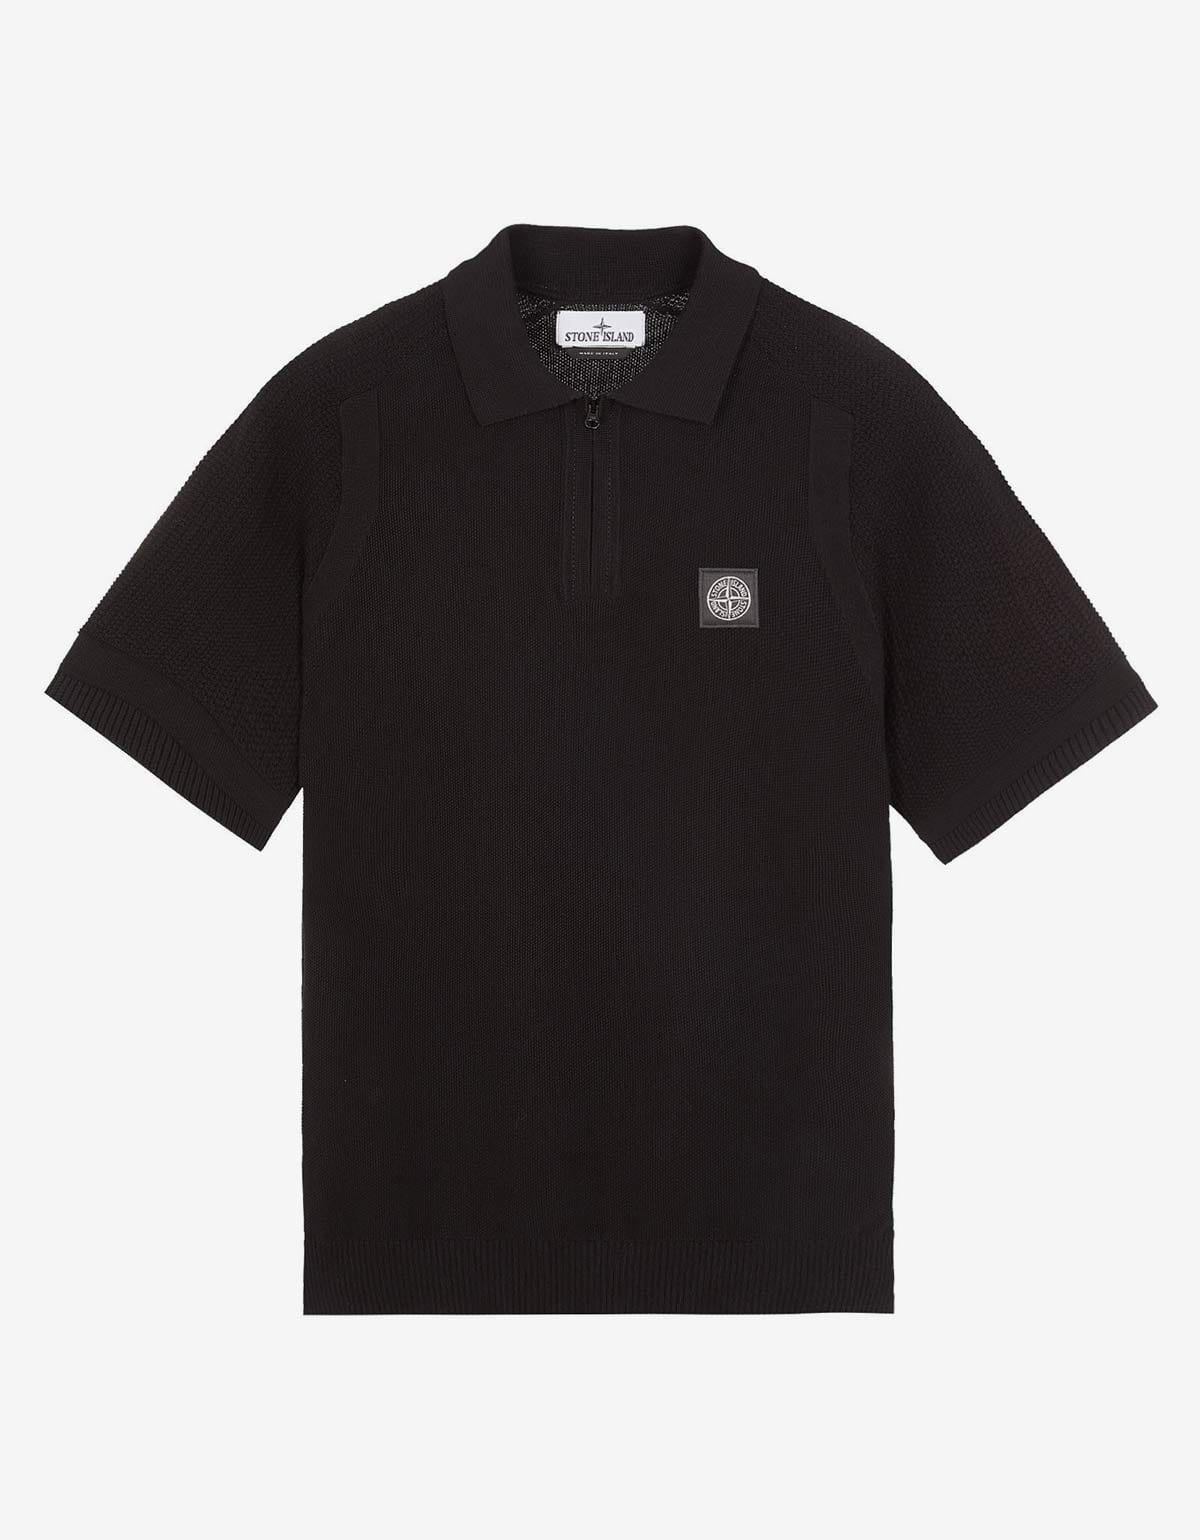 Stone Island Black Compass Logo Knitted Polo T-Shirt